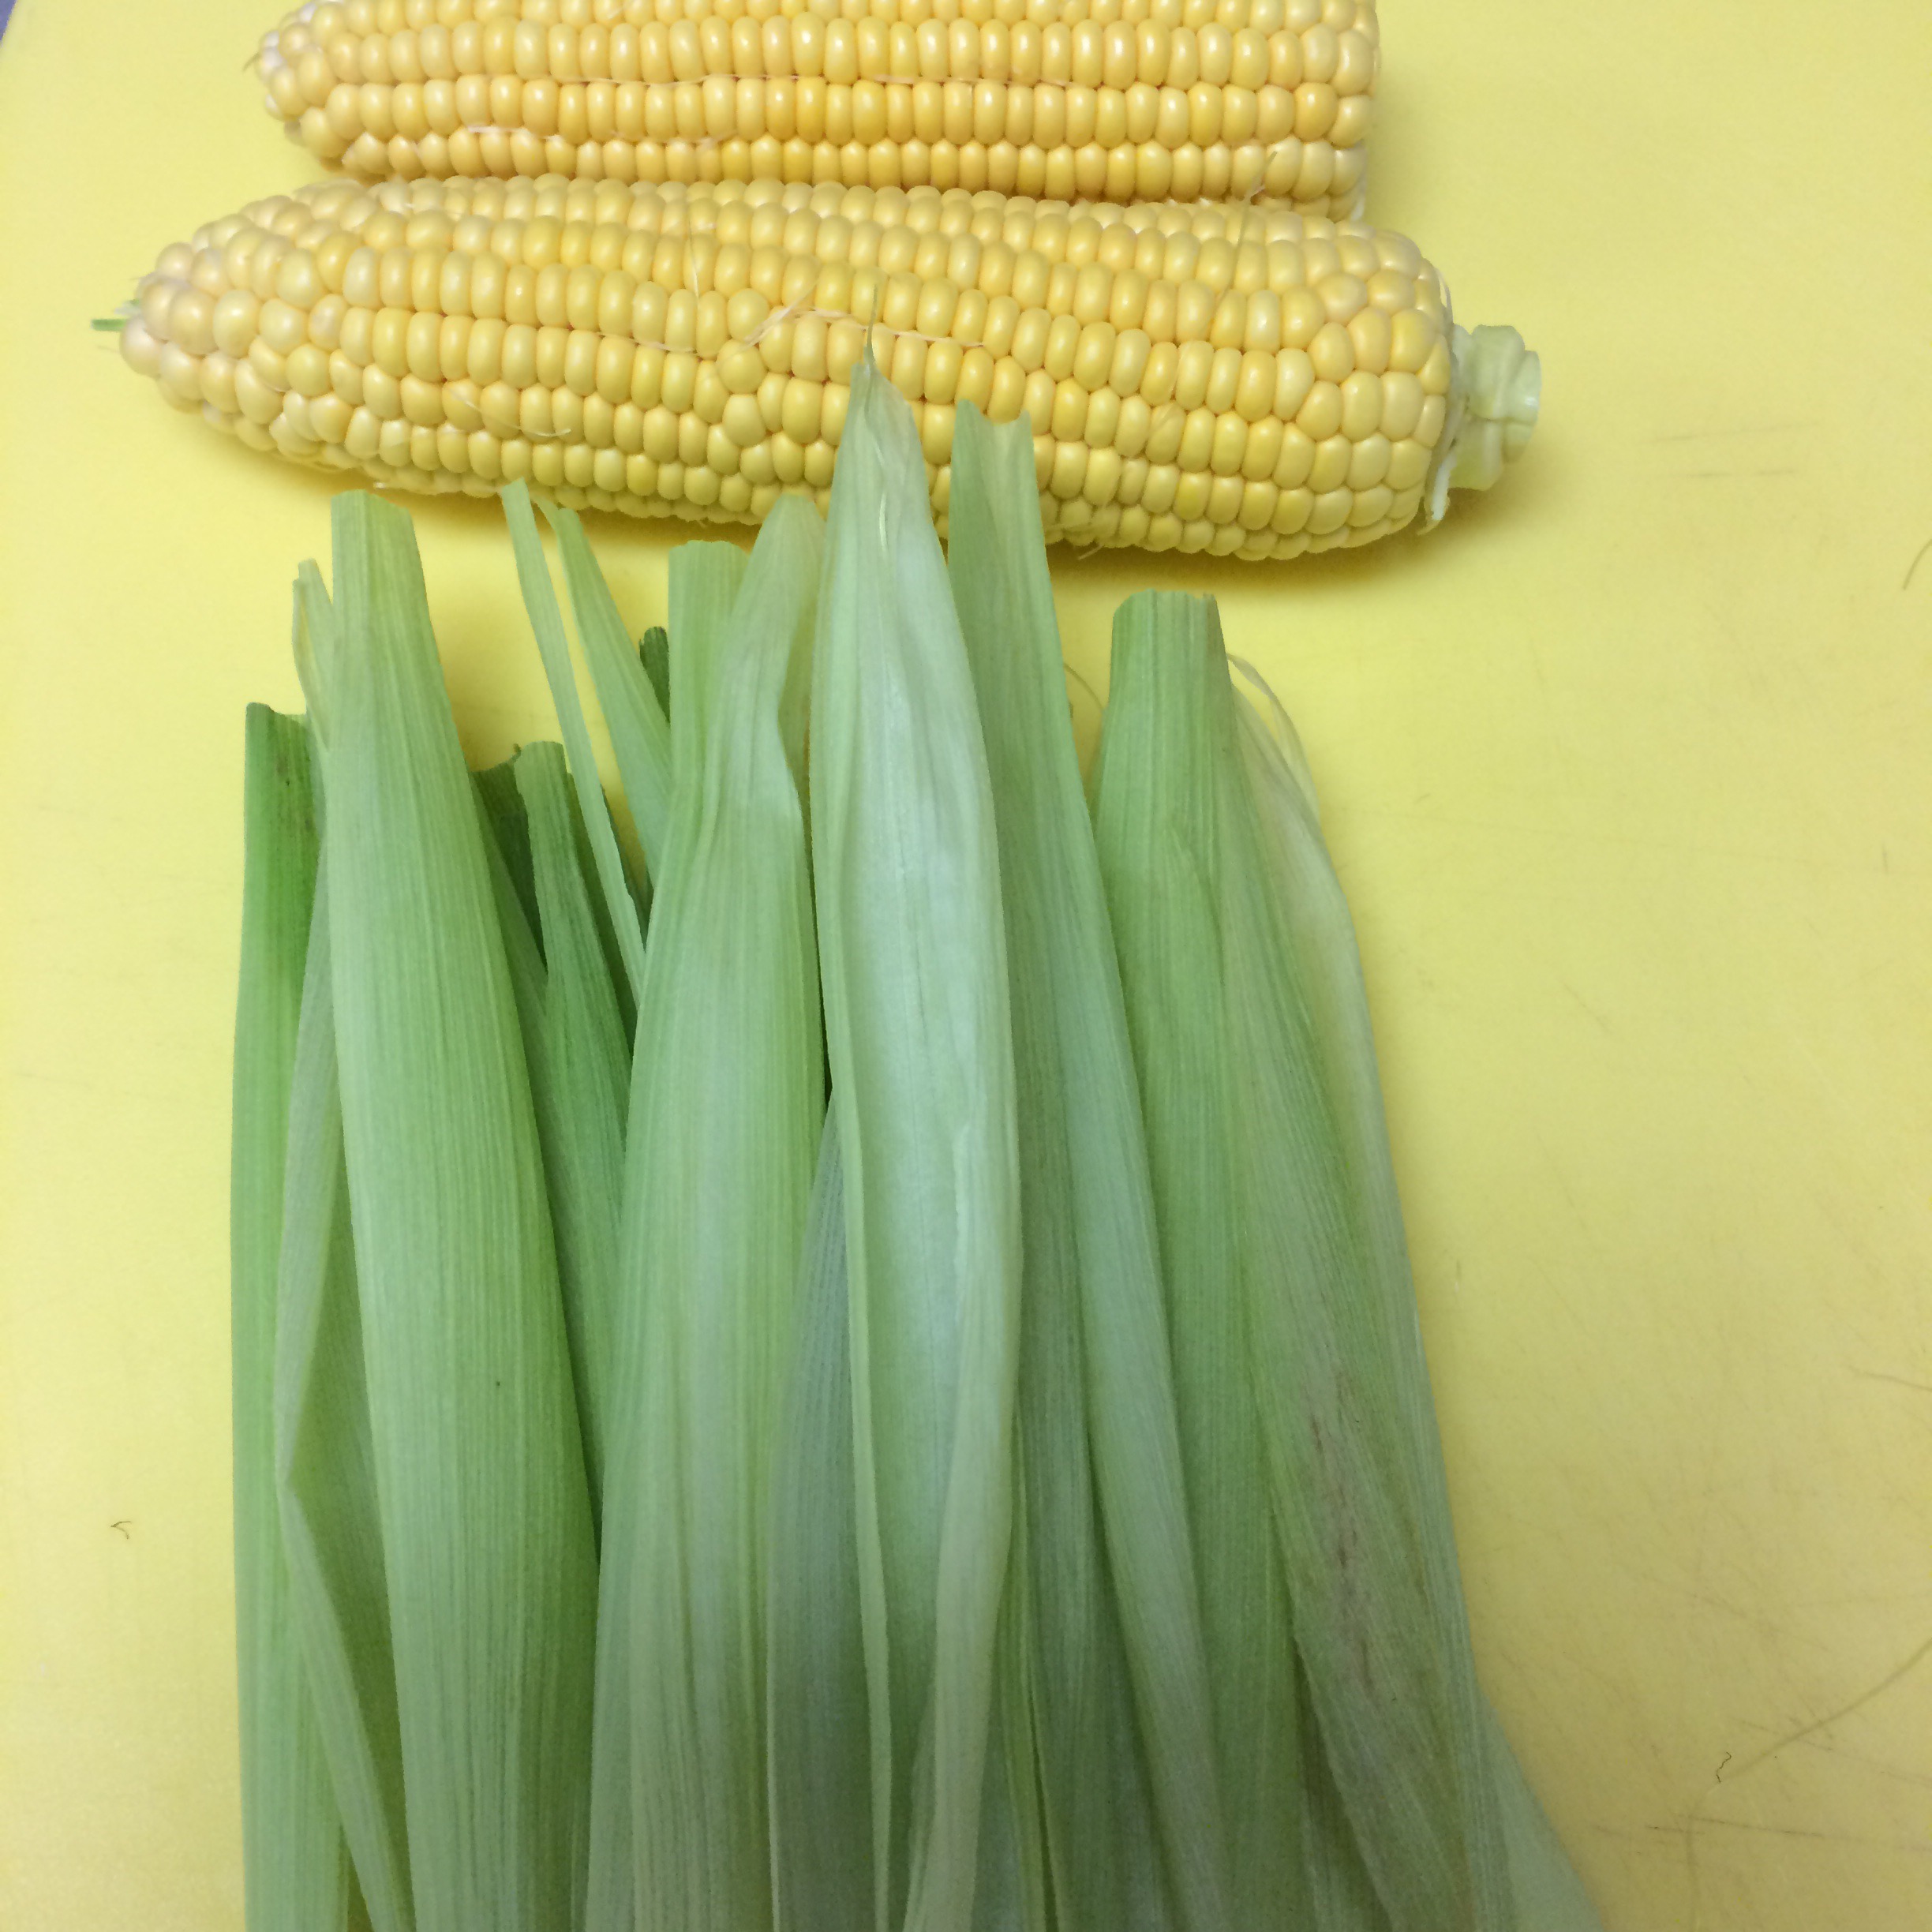 Corn and Corn Husks